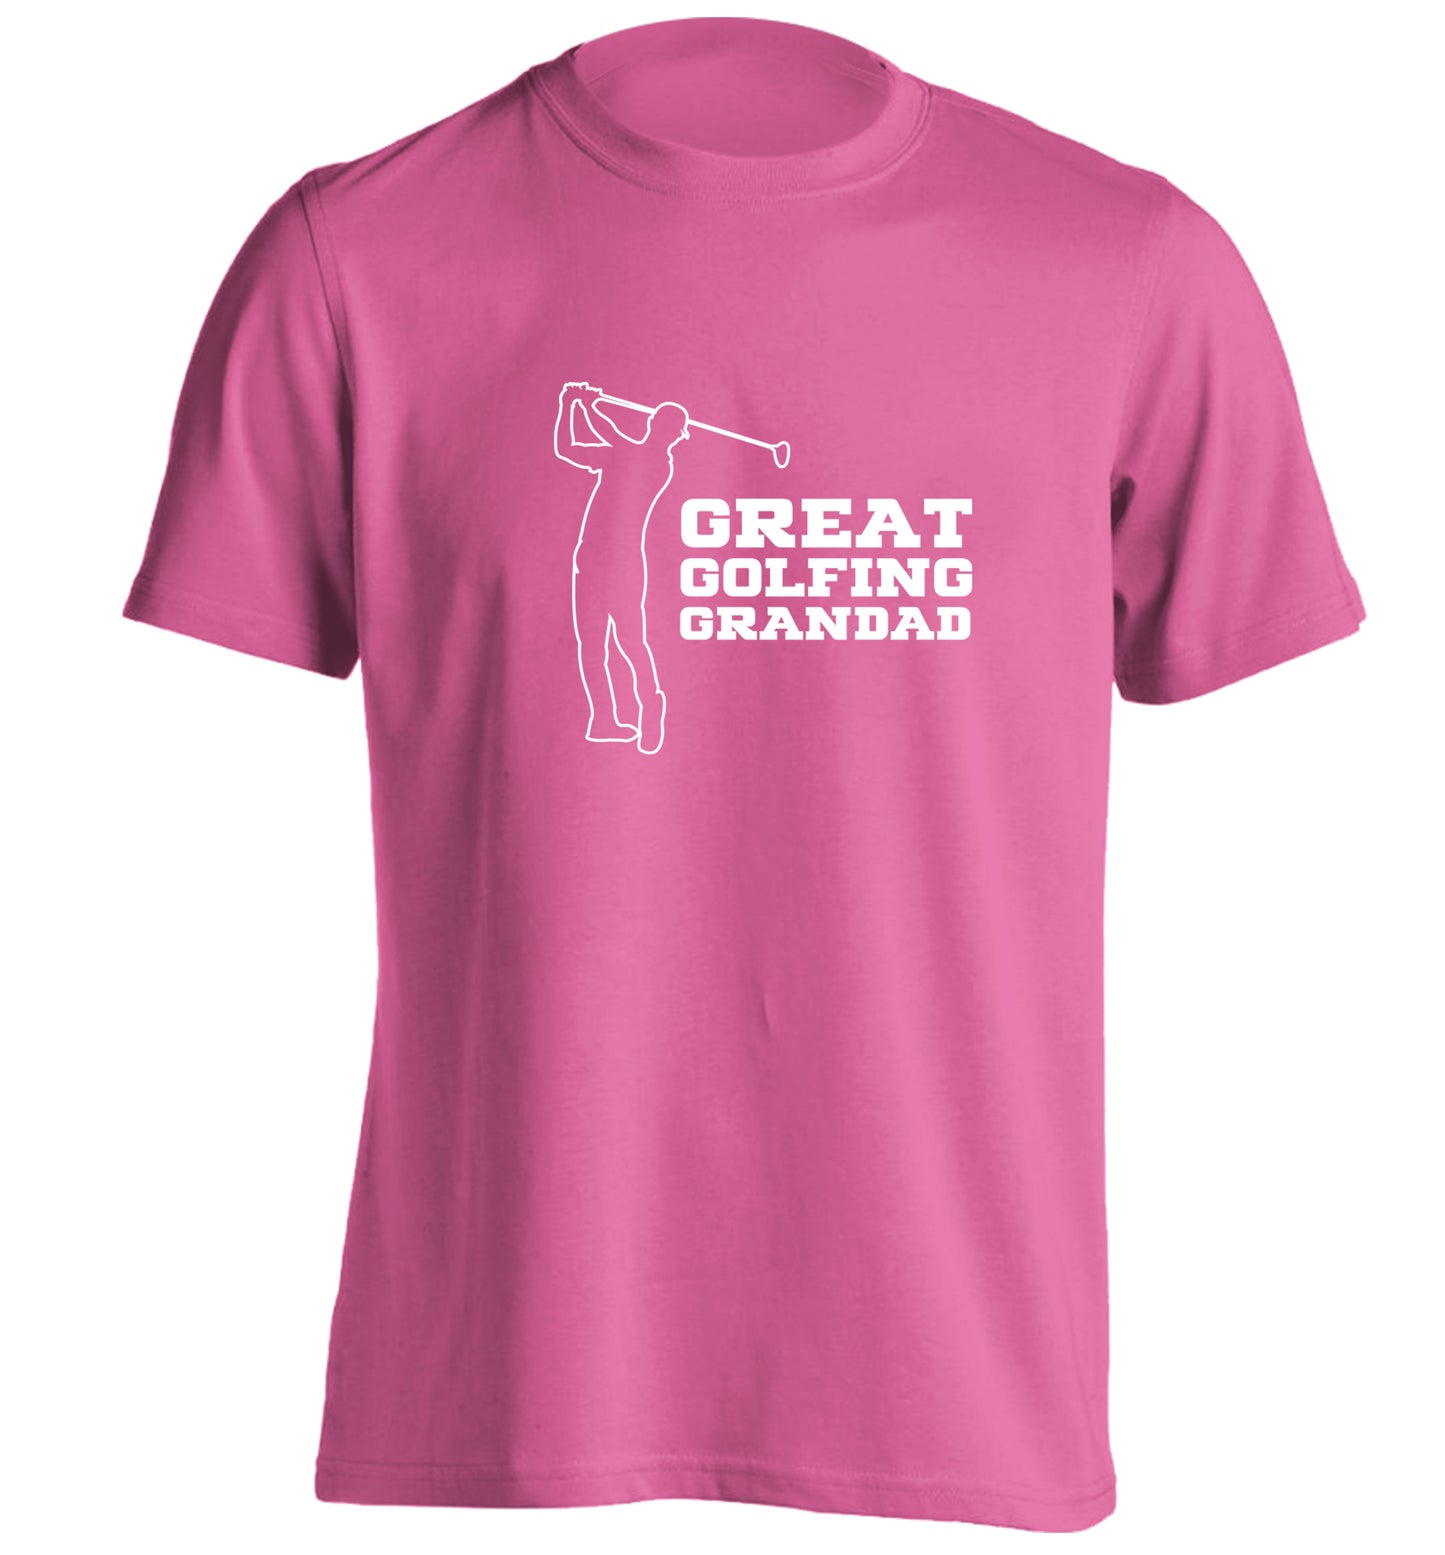 Great Golfing Grandad adults unisex pink Tshirt 2XL